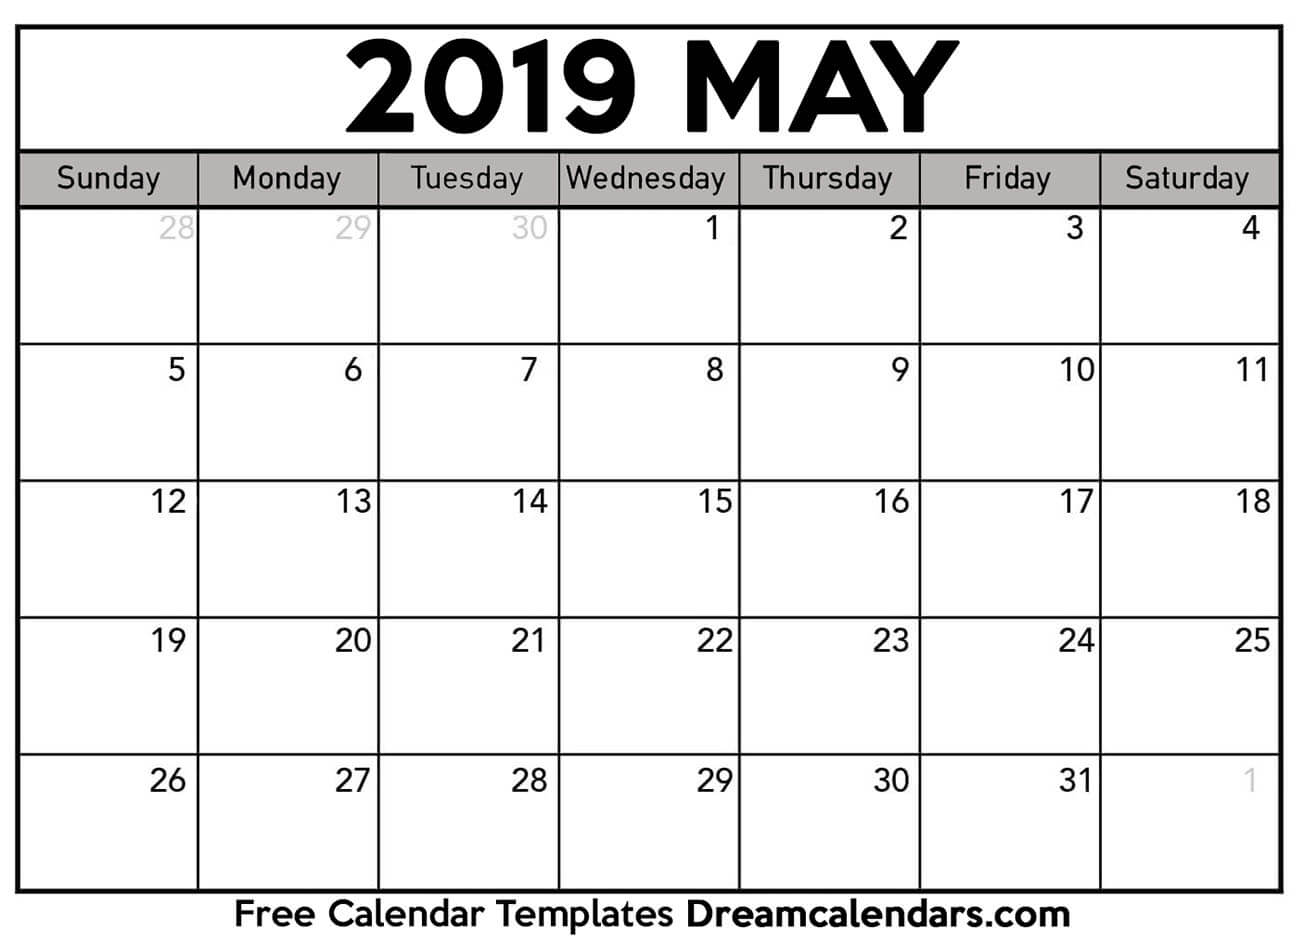 May 2019 calendar free blank printable templates